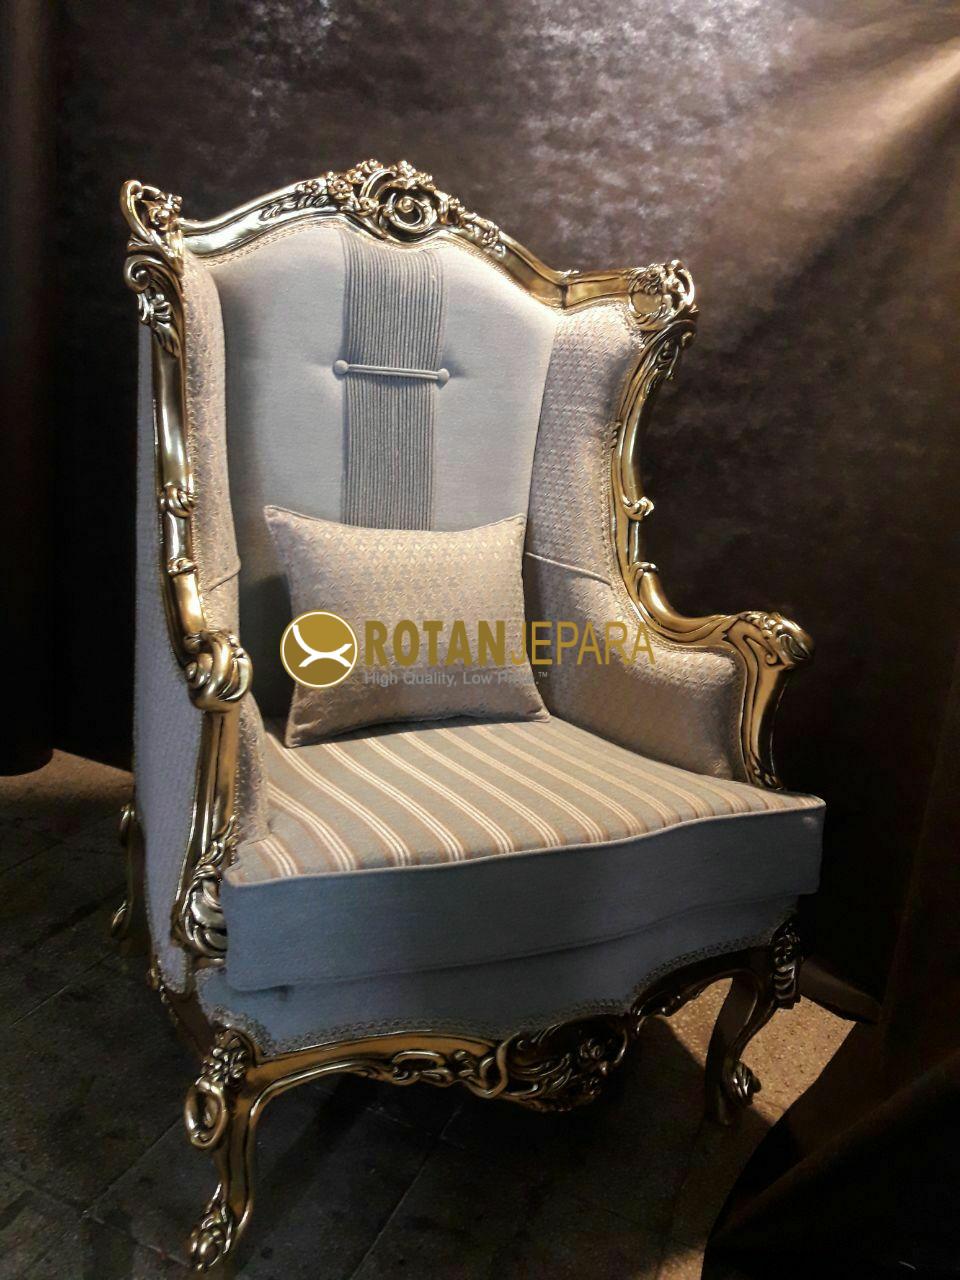 Syech Nurullah Gunung Jati Sofas Luxury Upholstred for Hotel